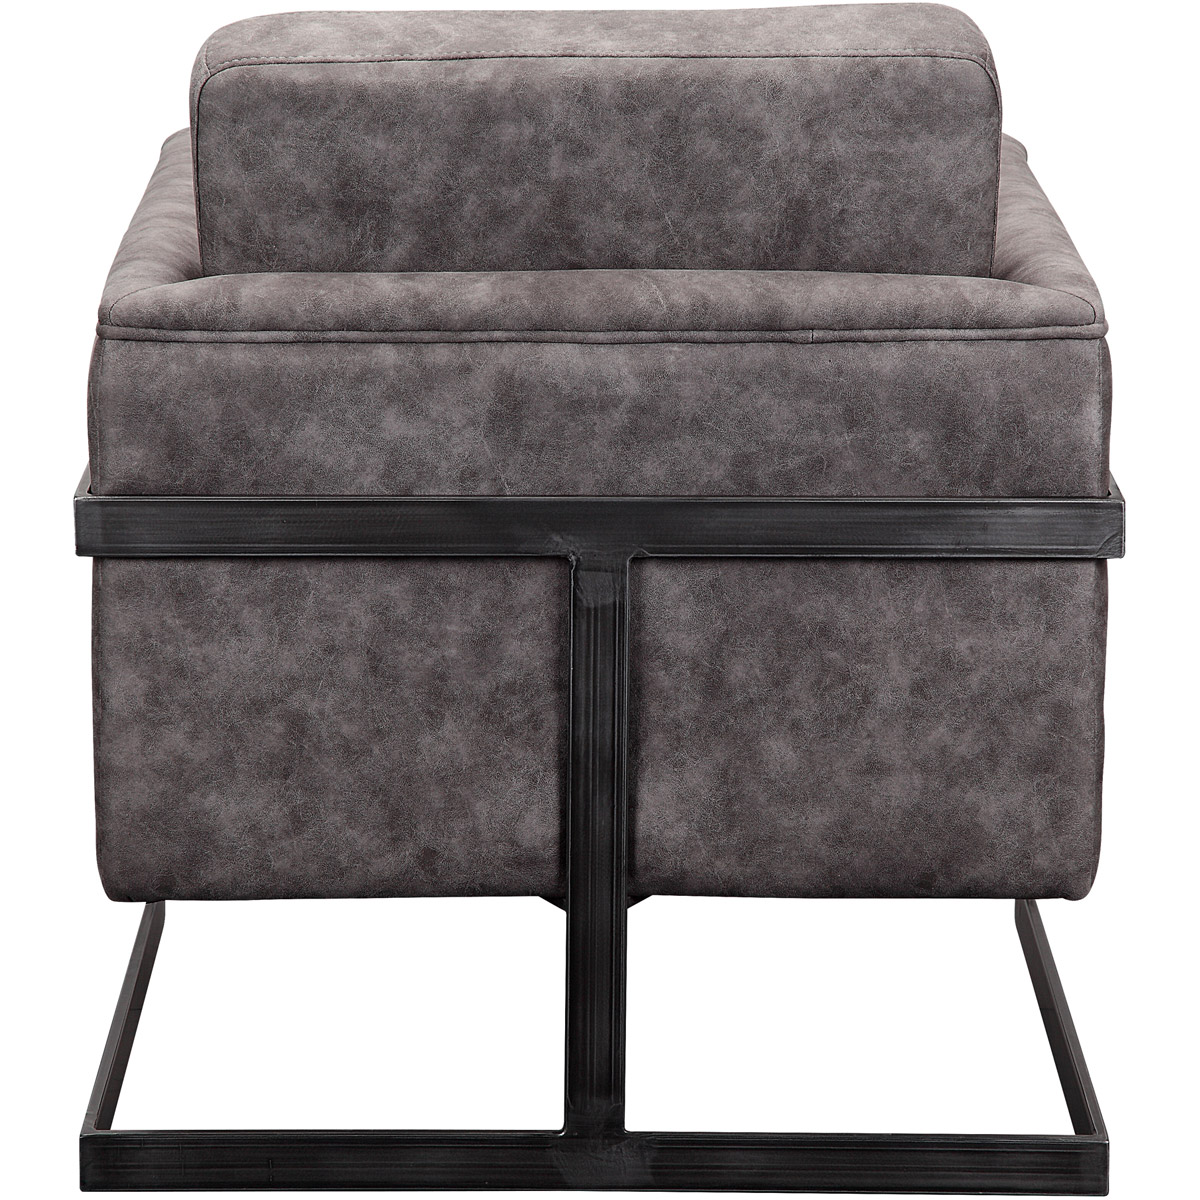 Moe's Home Collection PK-1082-15 Luxley Grey Club Chair | eBay